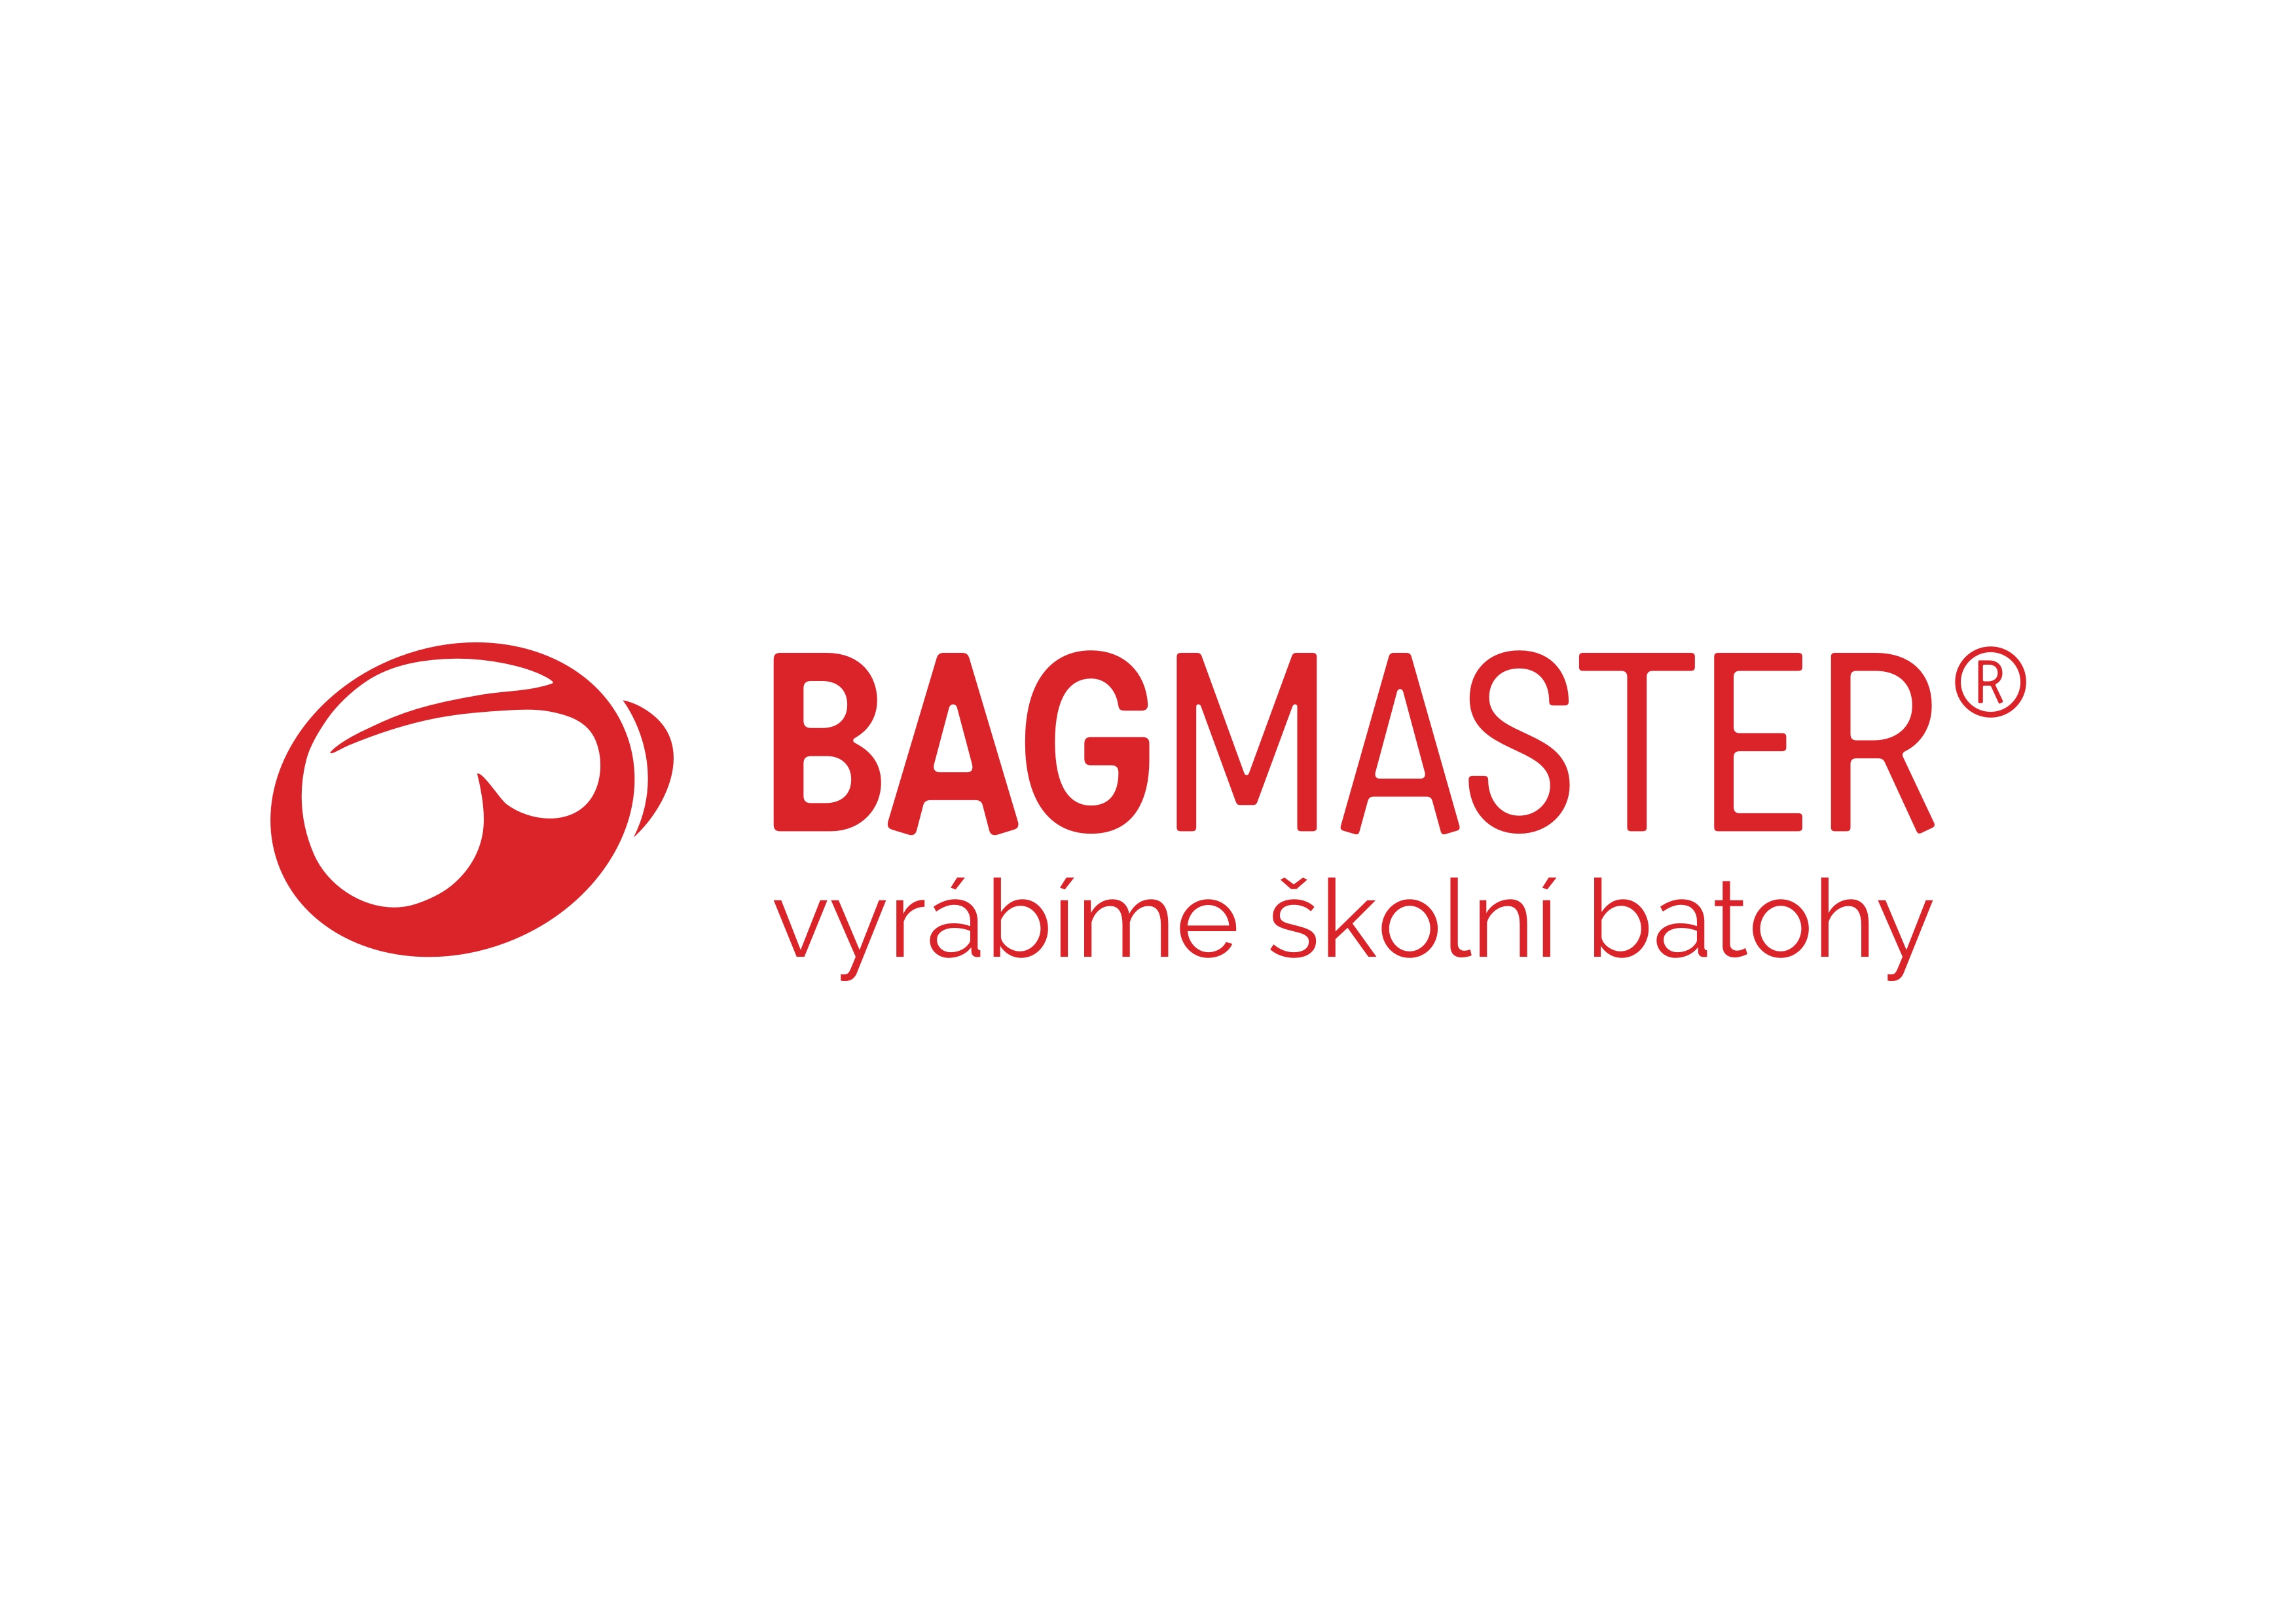 Bagmaster logo vyrábíme